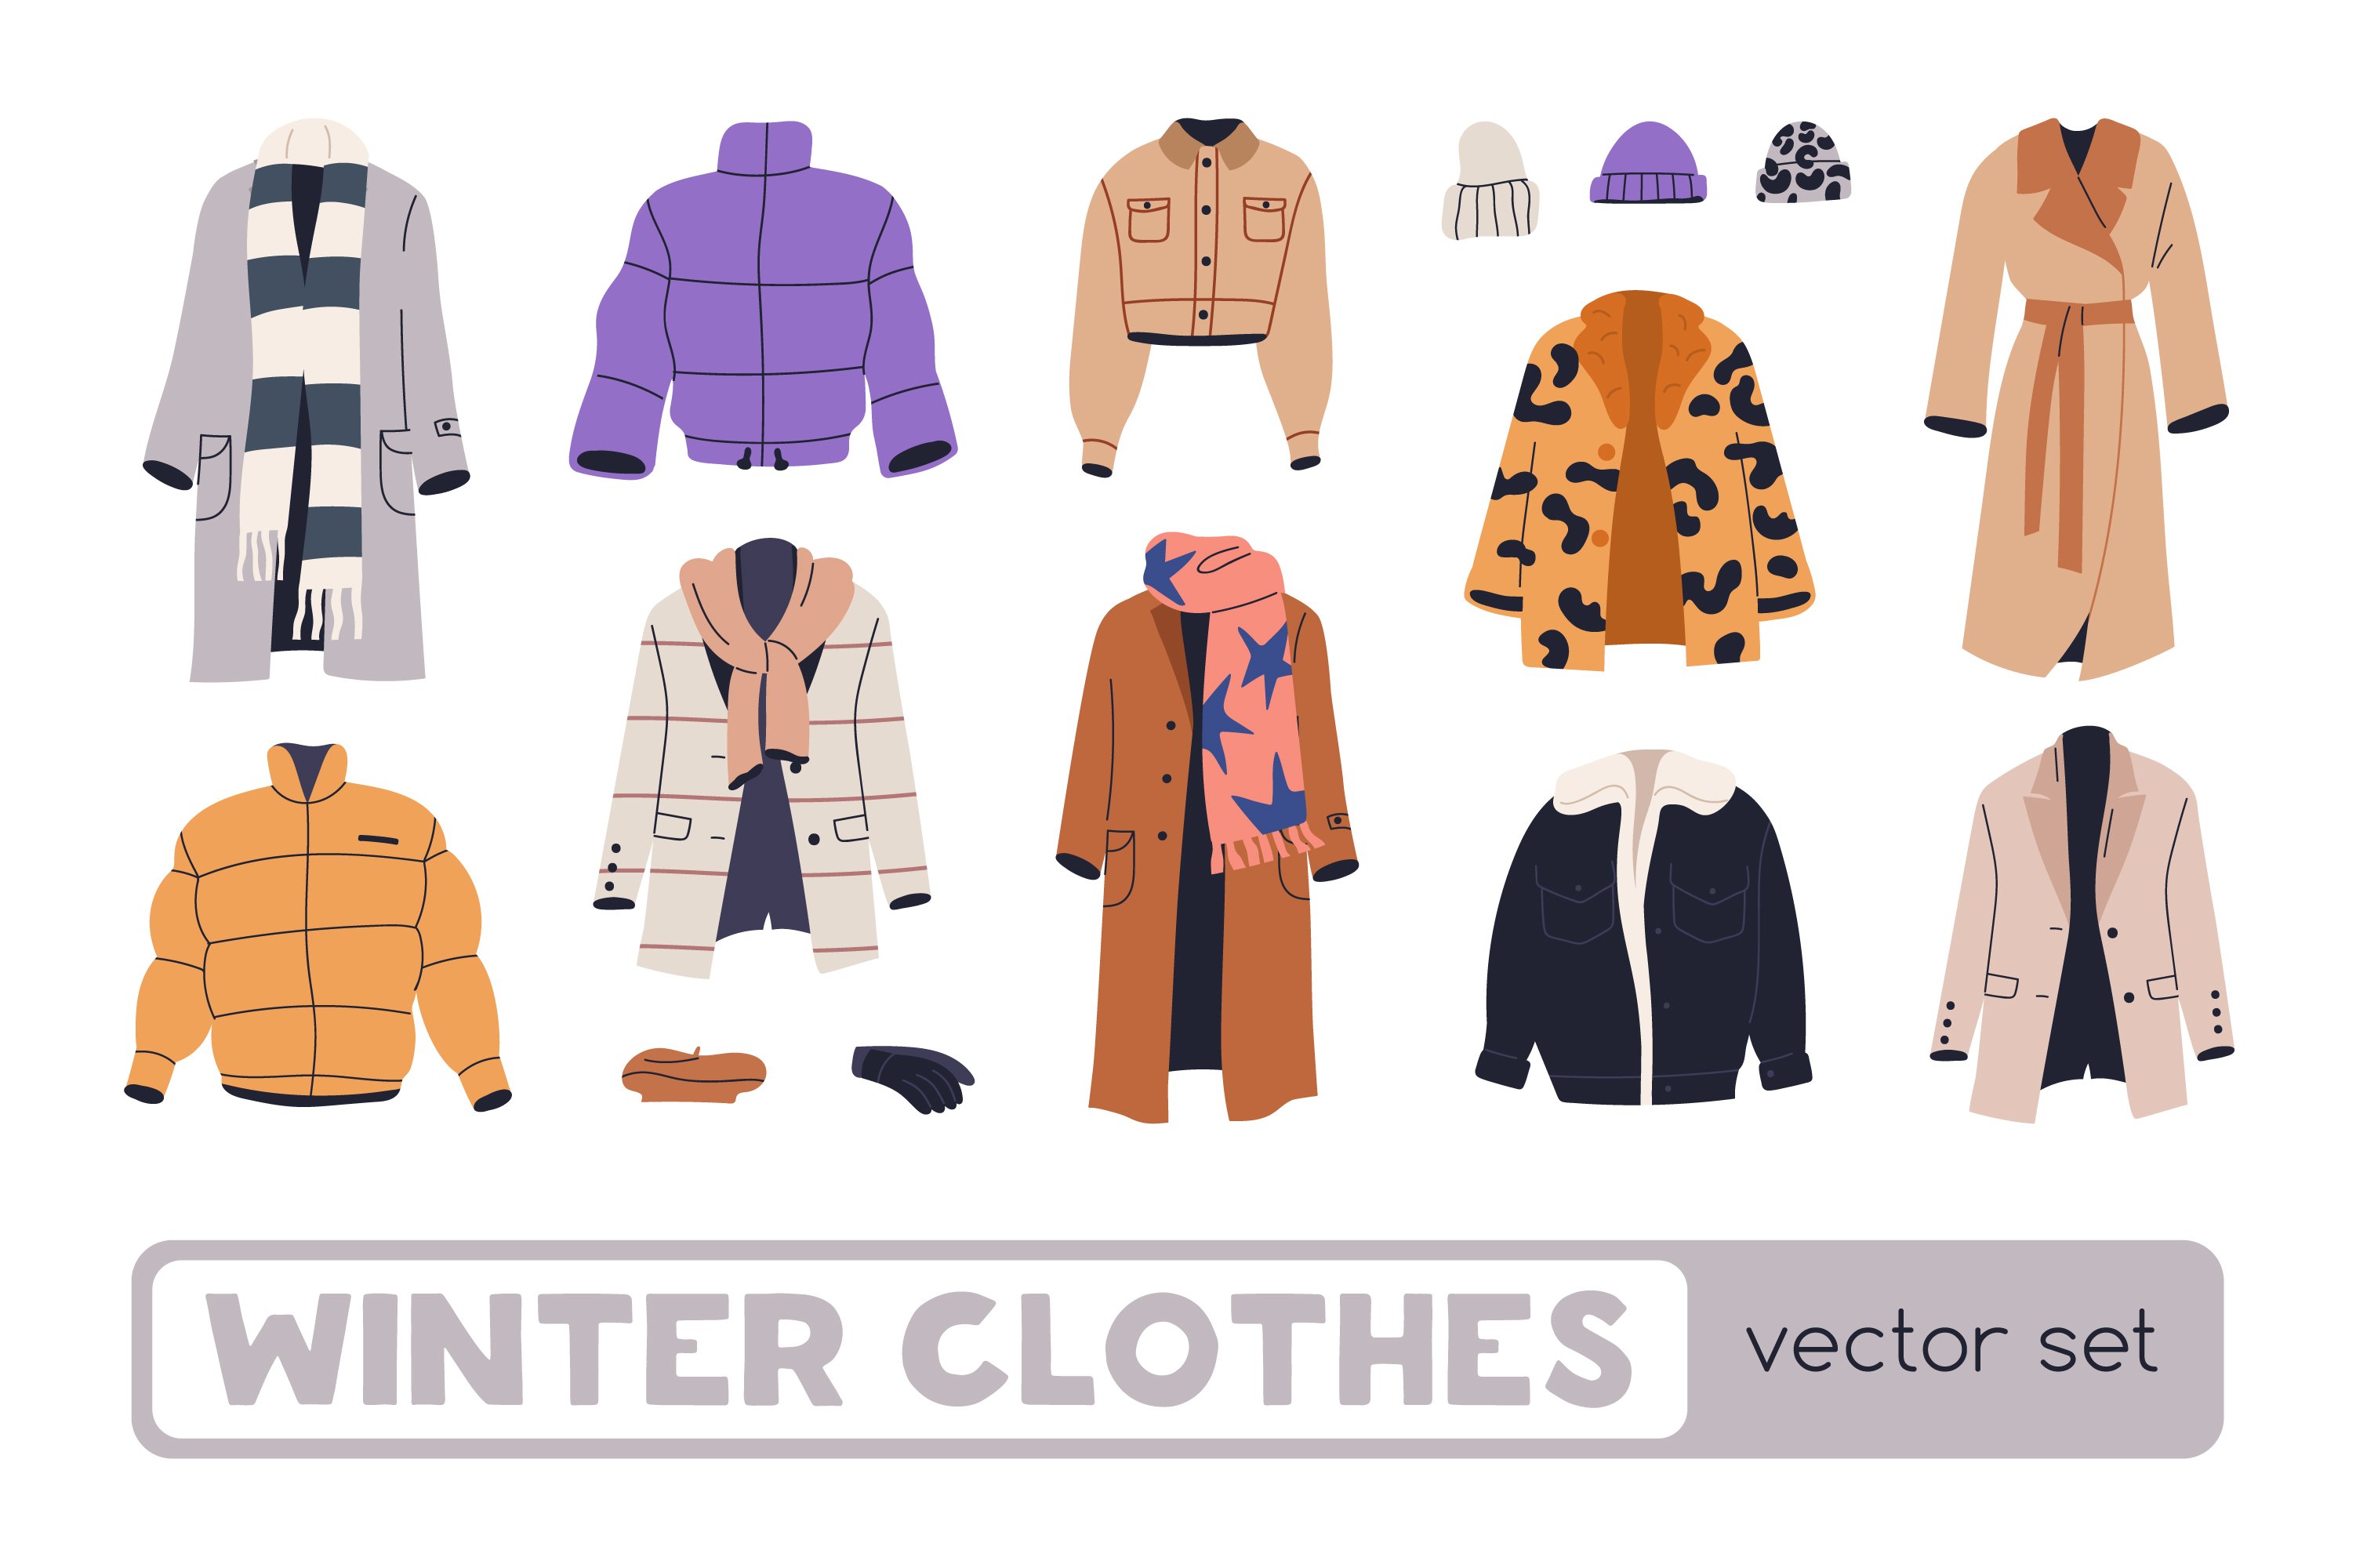 Warm clothes: jackets, coats set cover image.